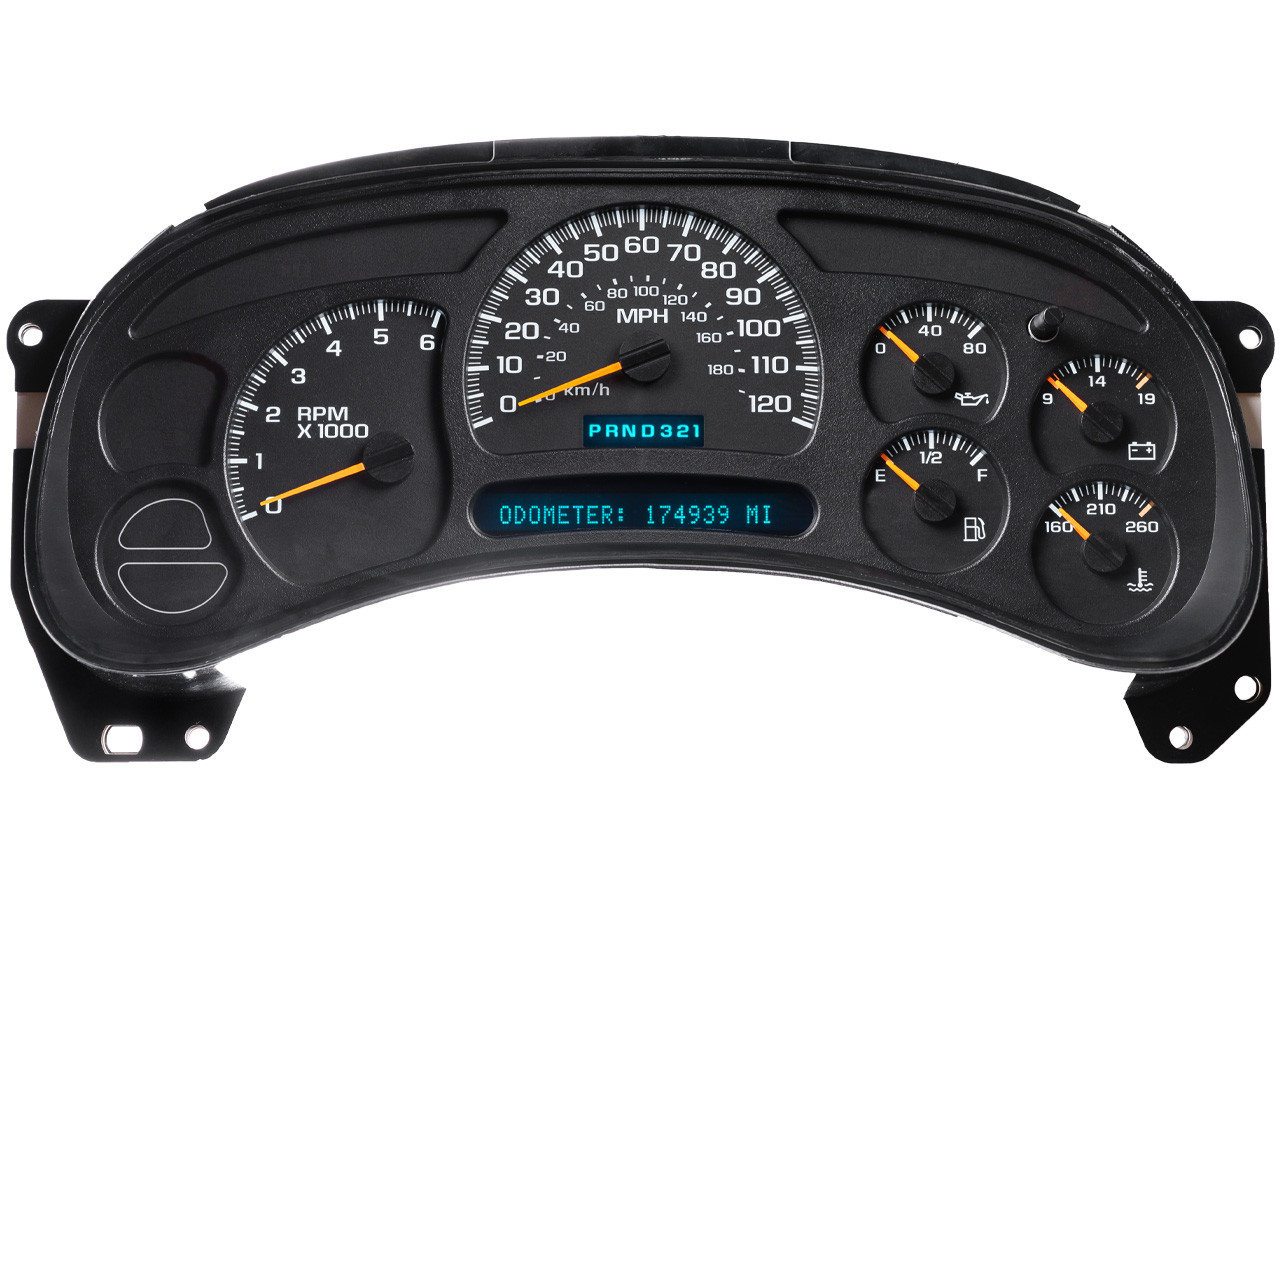 GM Chevy Impala Speedometer Instrument Cluster Gauge Light Repair Service